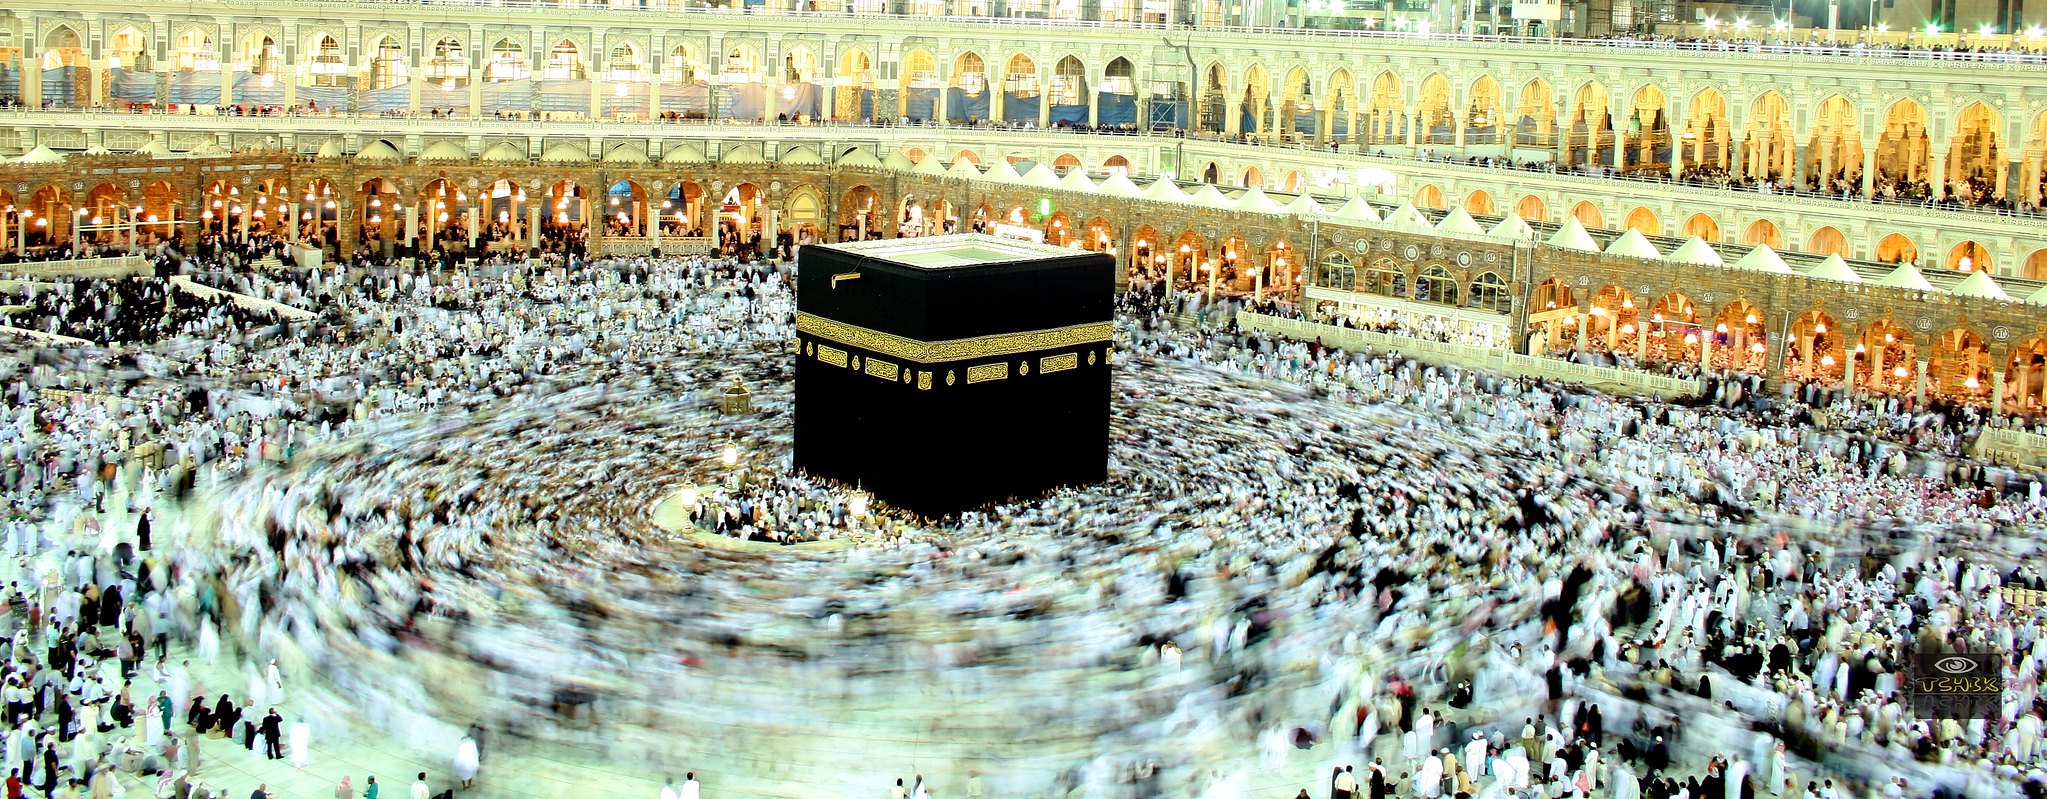 Al-Madinah Al-Monawara& Mecca Al-Mokarama | Flickr